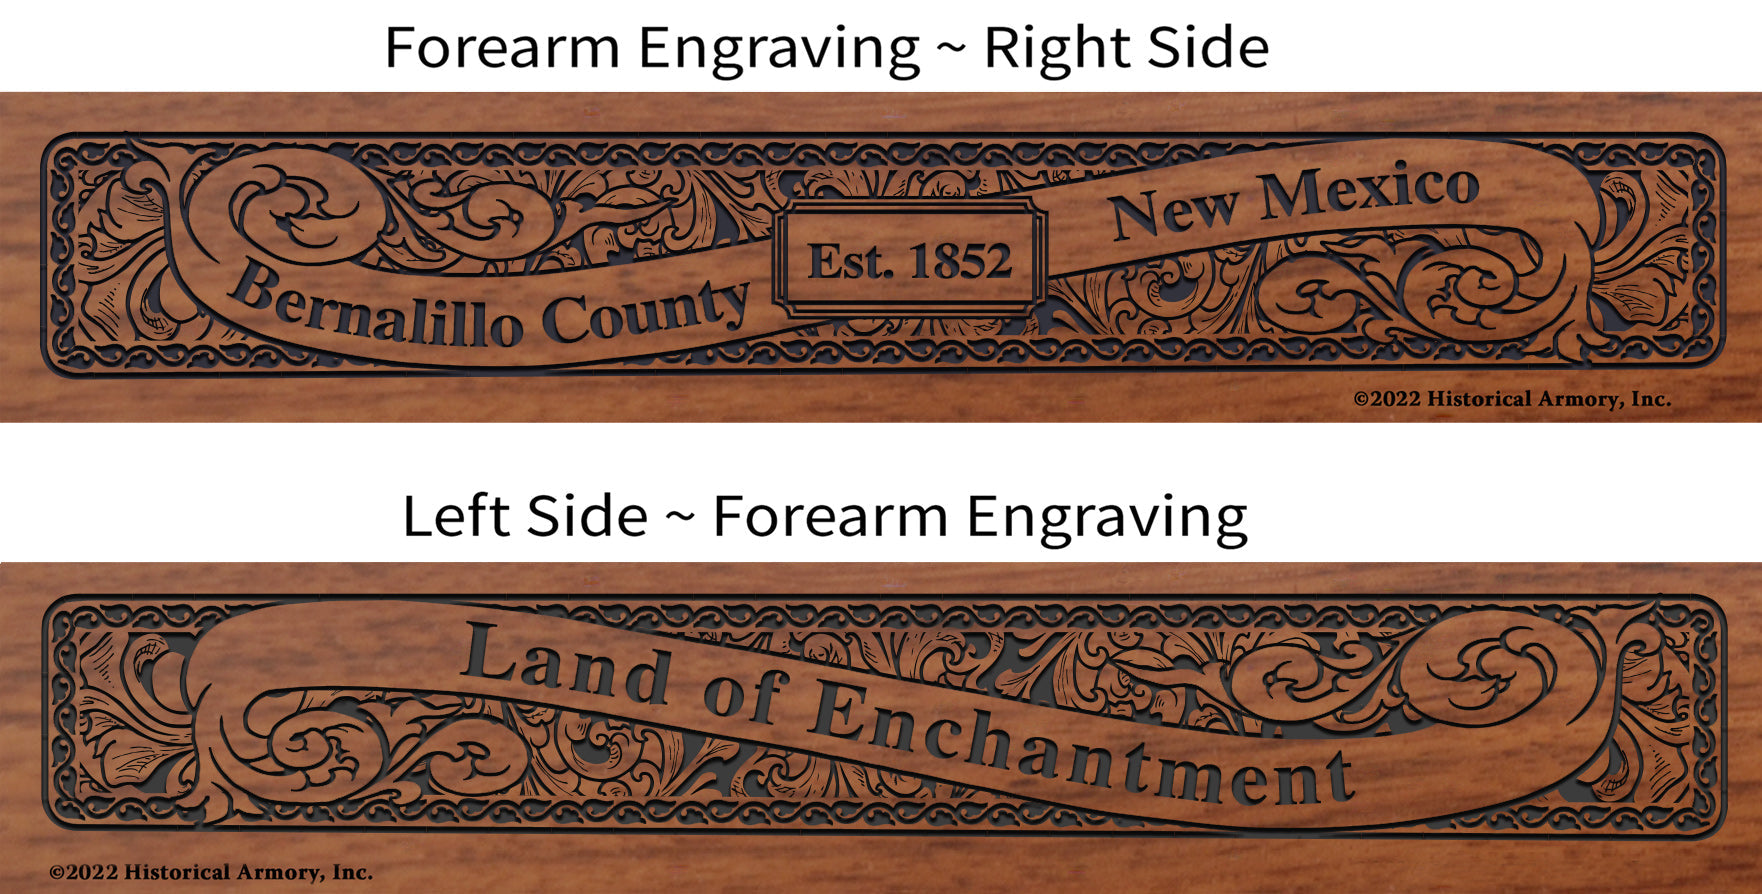 Bernalillo County New Mexico Engraved Rifle Forearm